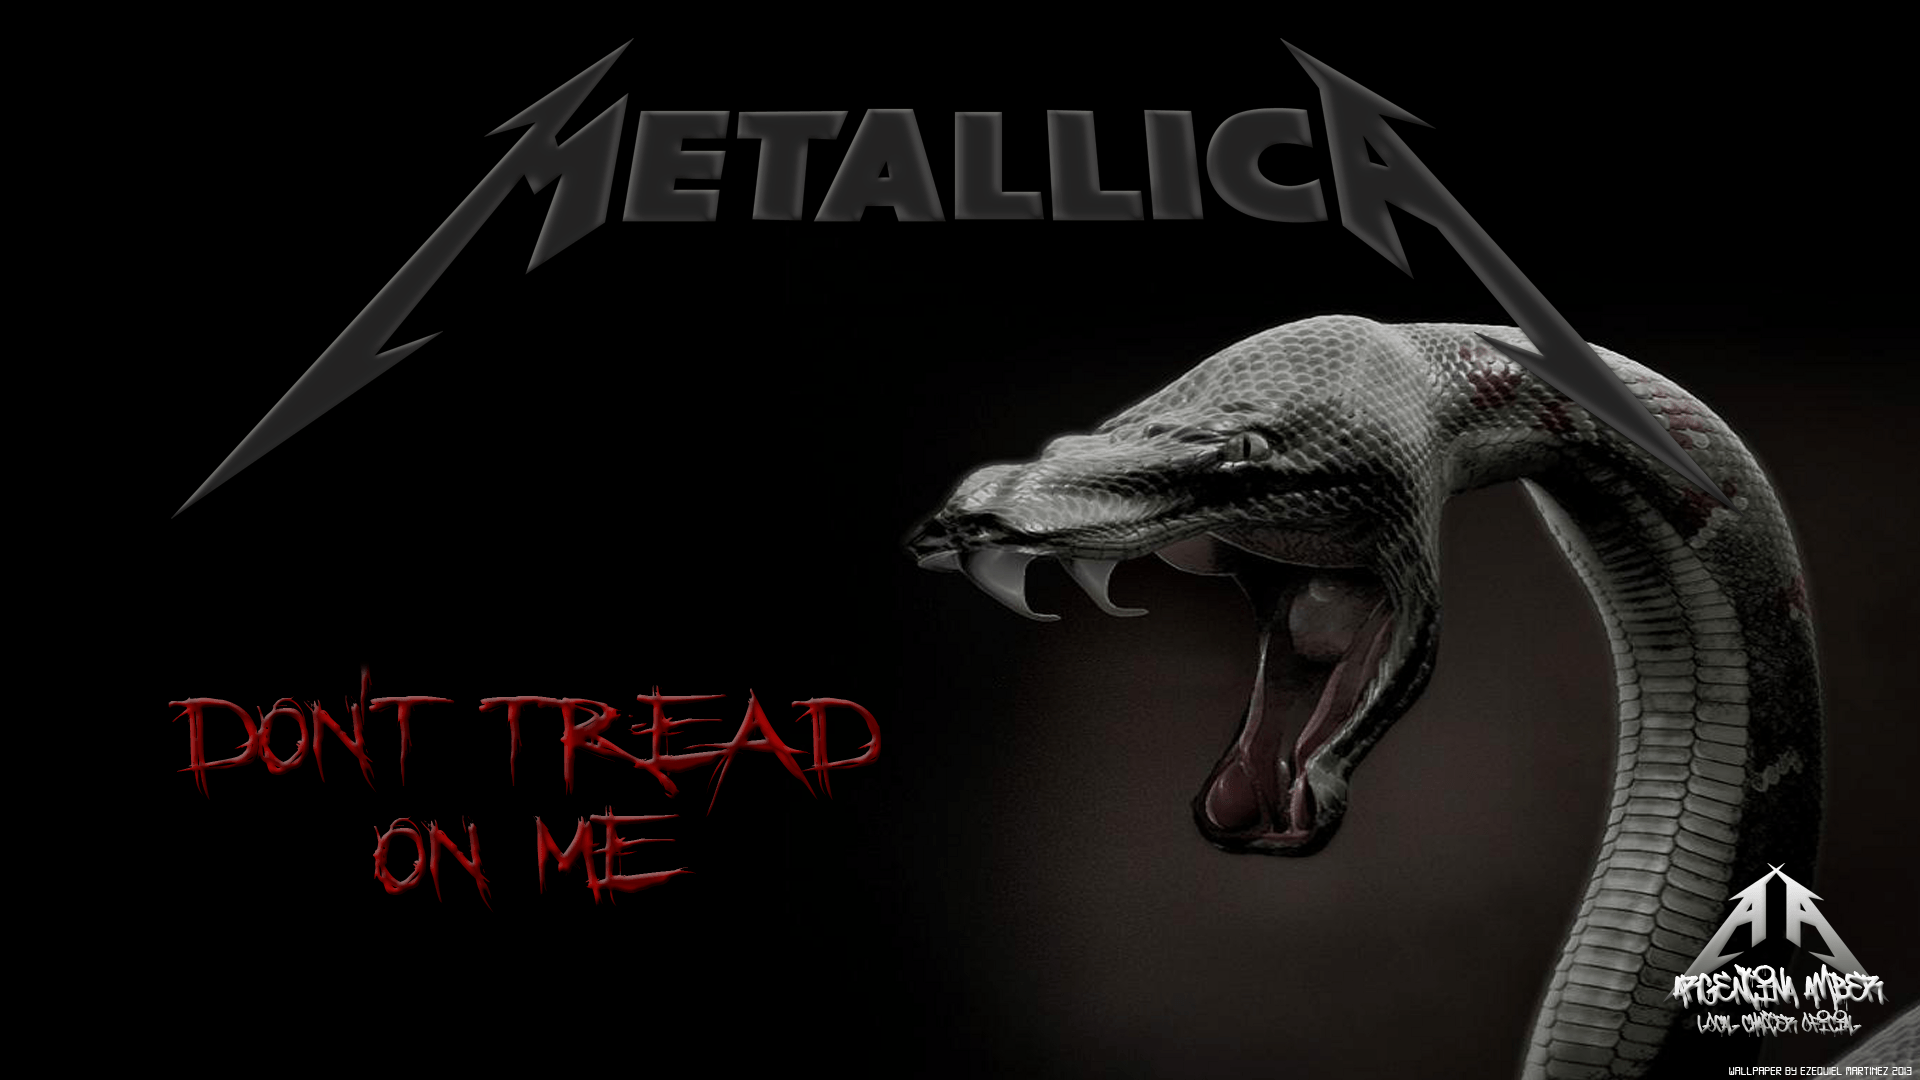 Metallica Wallpaper High Definition. Heavy metal in 2019